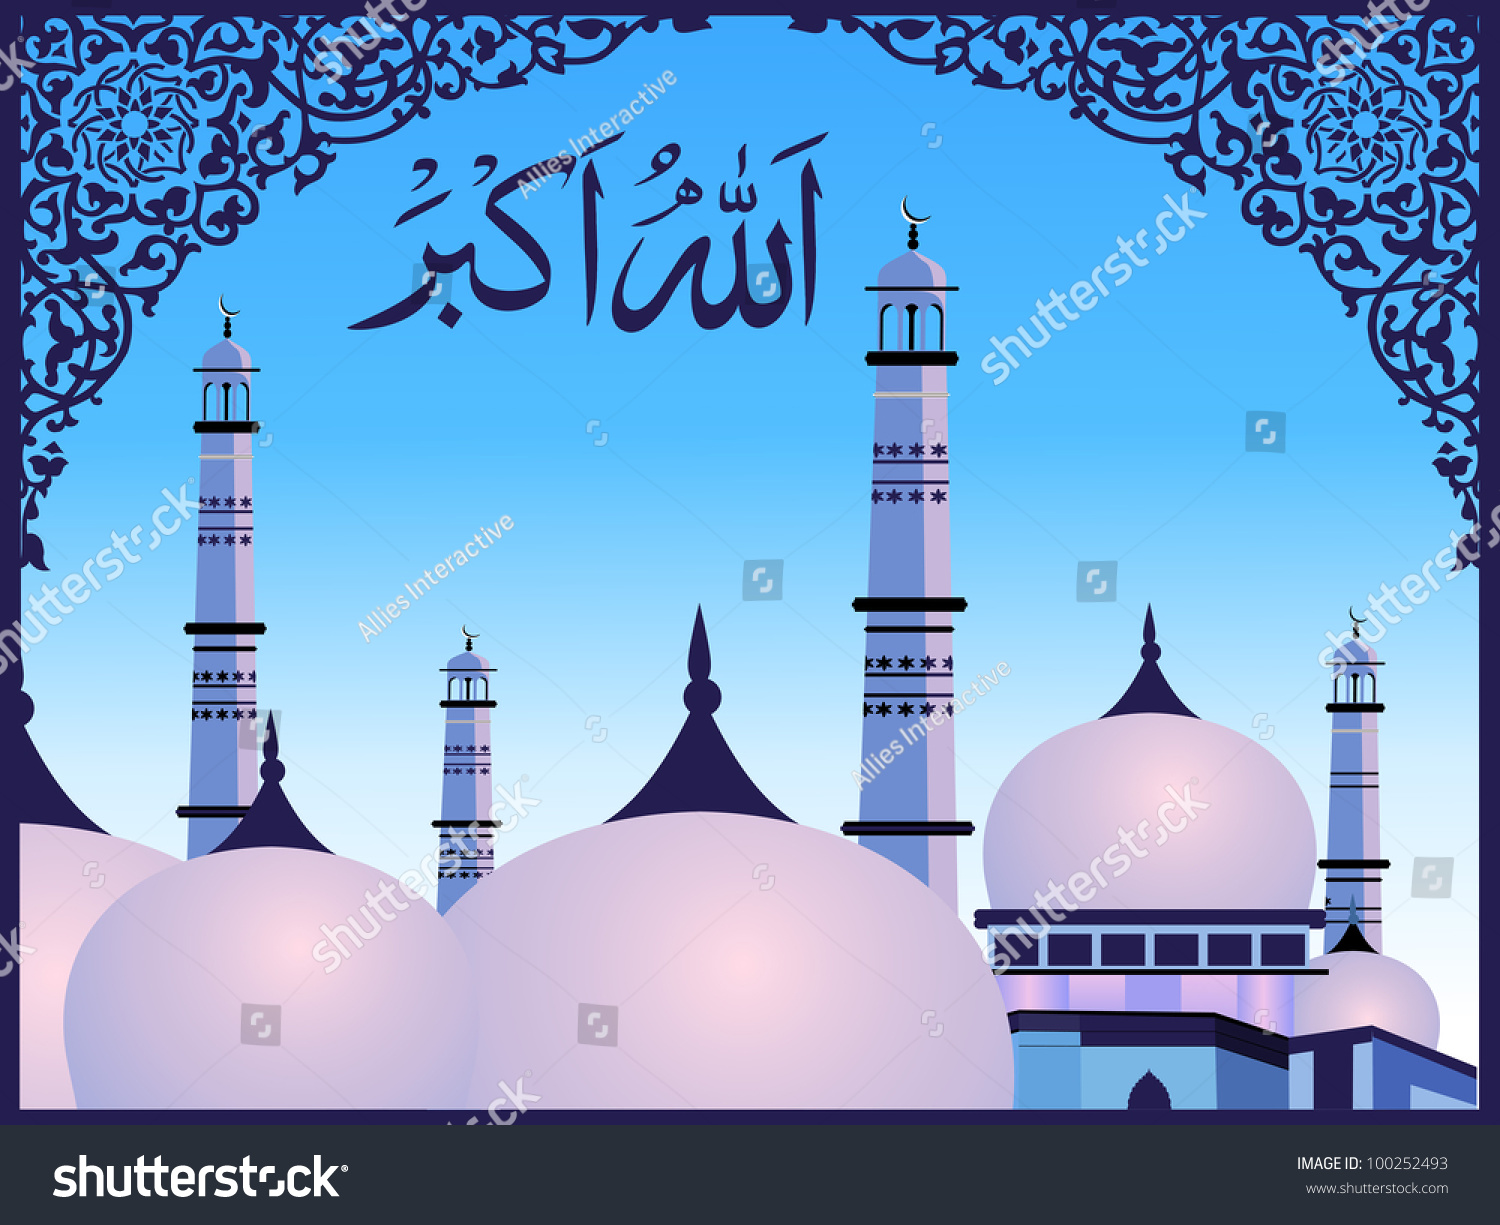 Arabic Islamic Calligraphy Of Allah O Akbar (Allah Is [The] Greatest